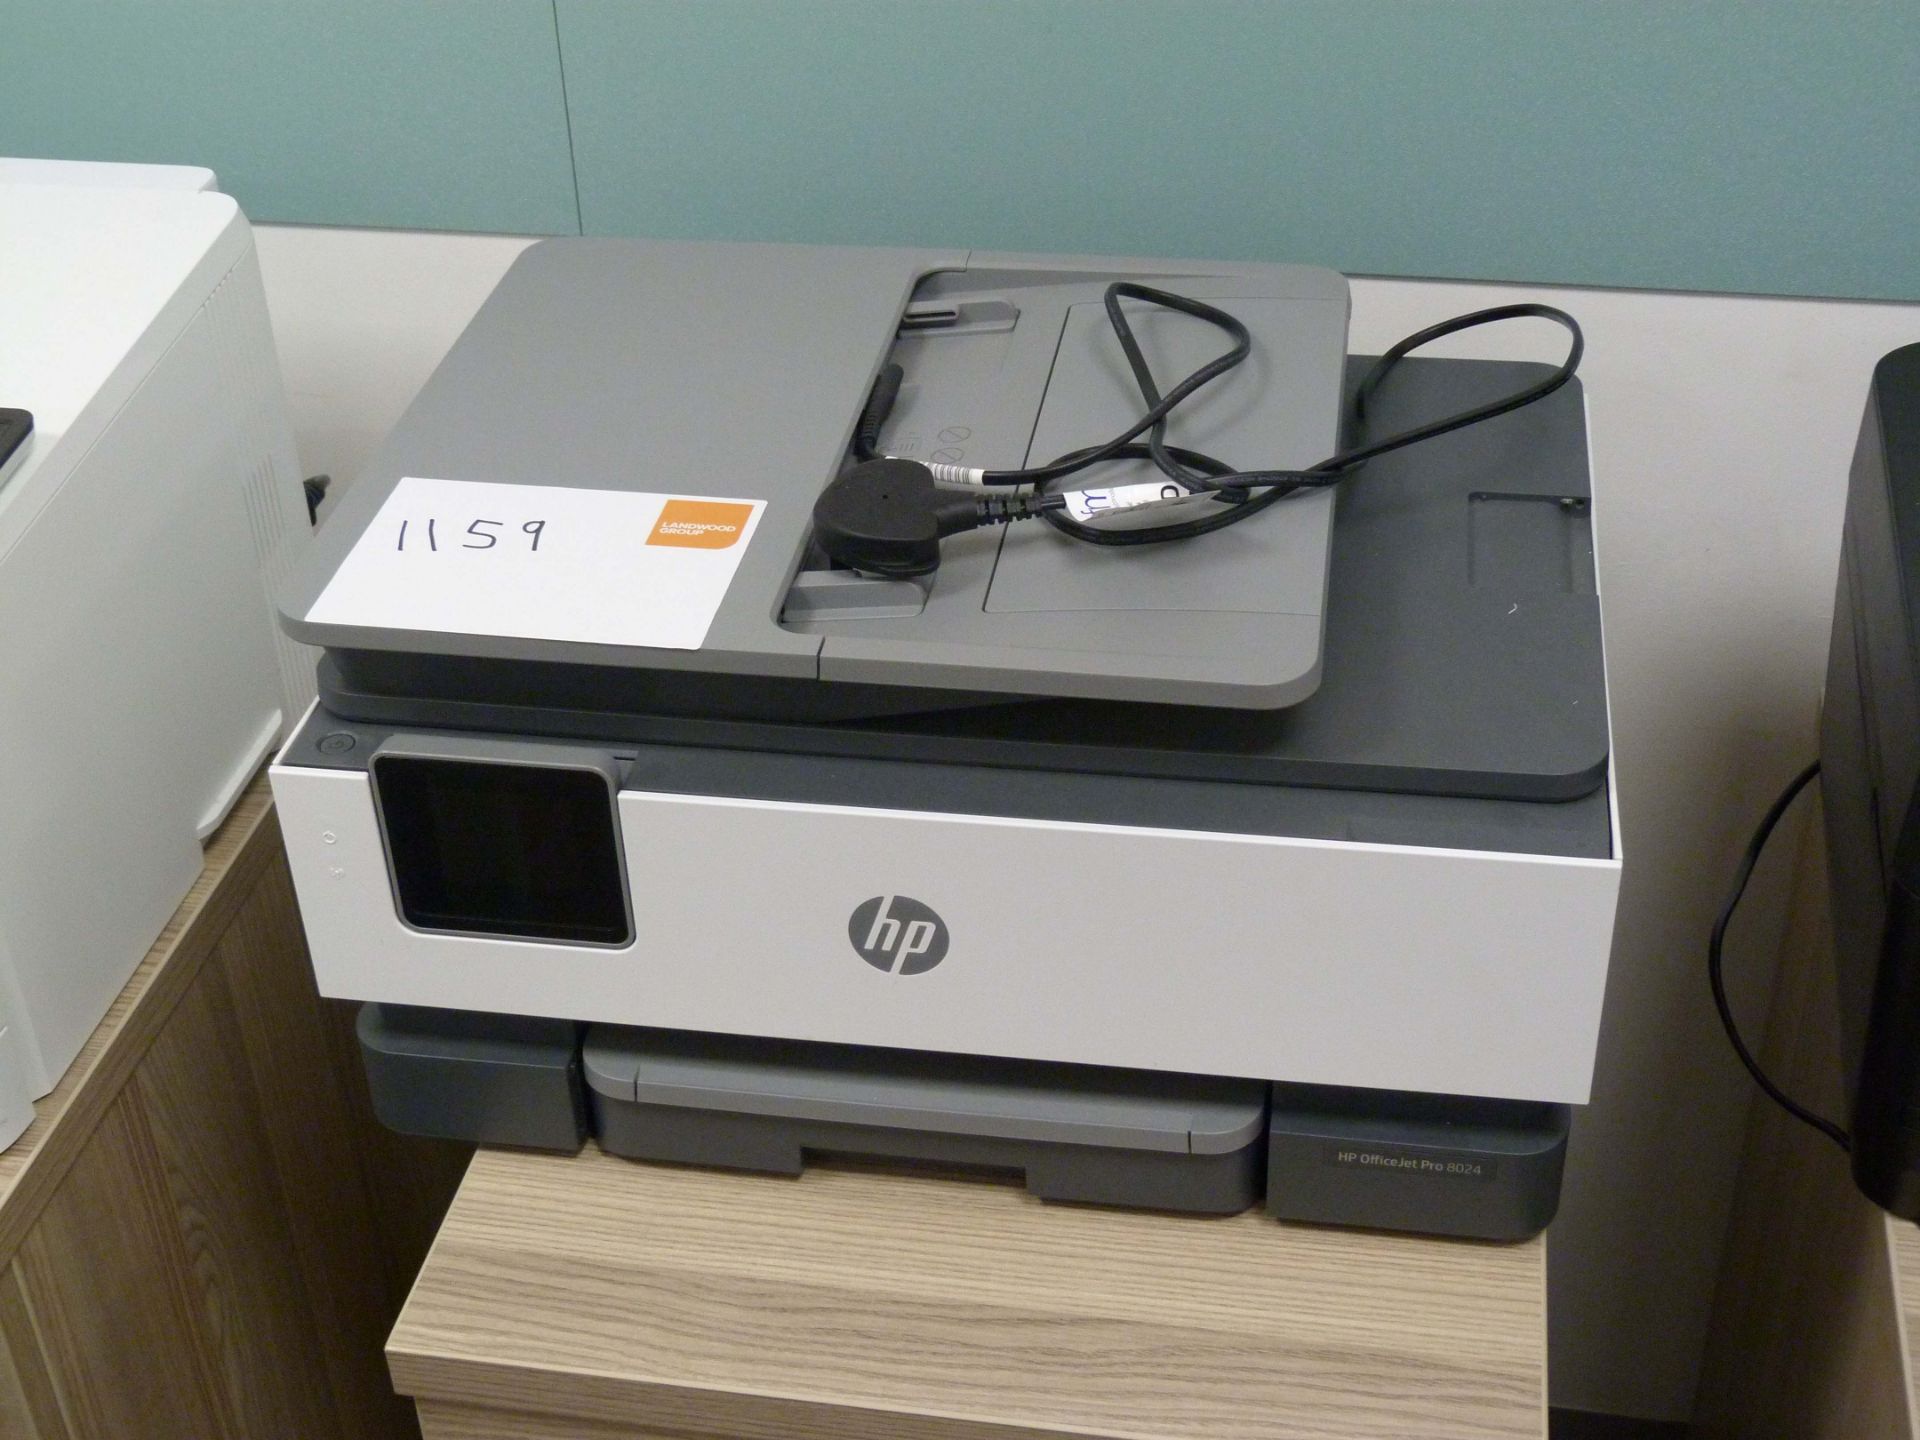 A HP OfficeJet Pro 8024 Printer.